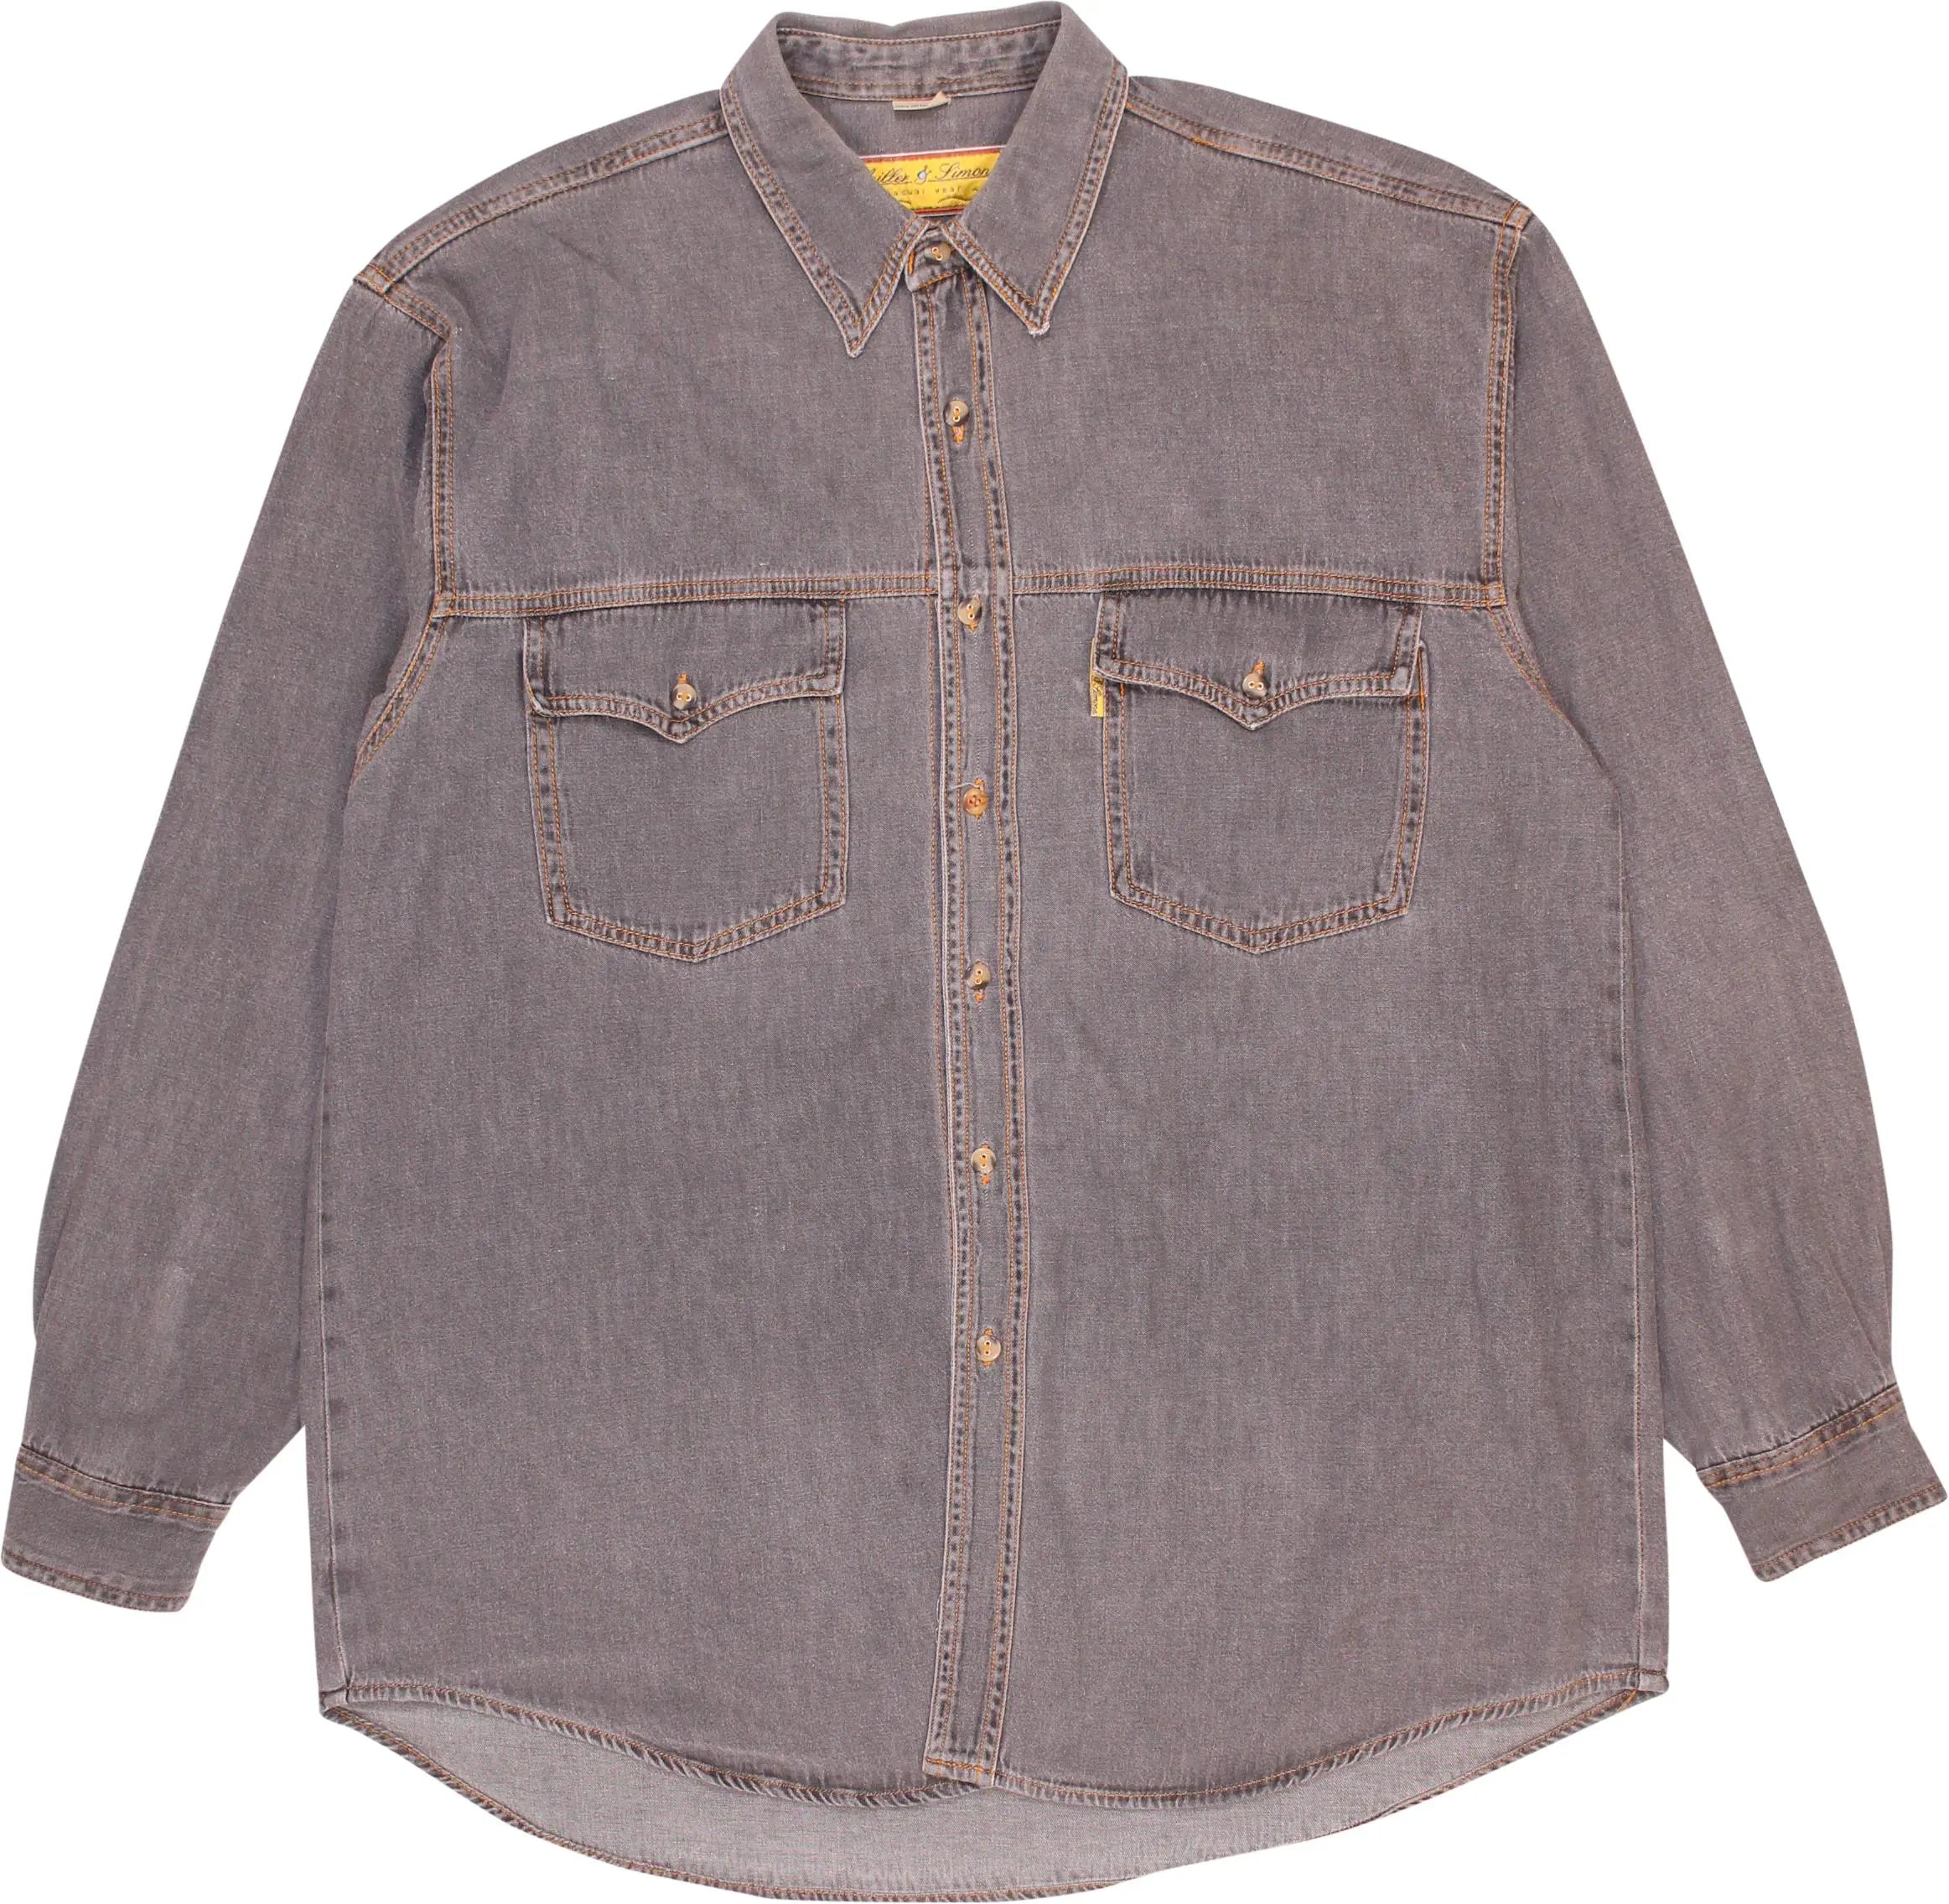 Miller & Simons - 90s Denim Shirt- ThriftTale.com - Vintage and second handclothing